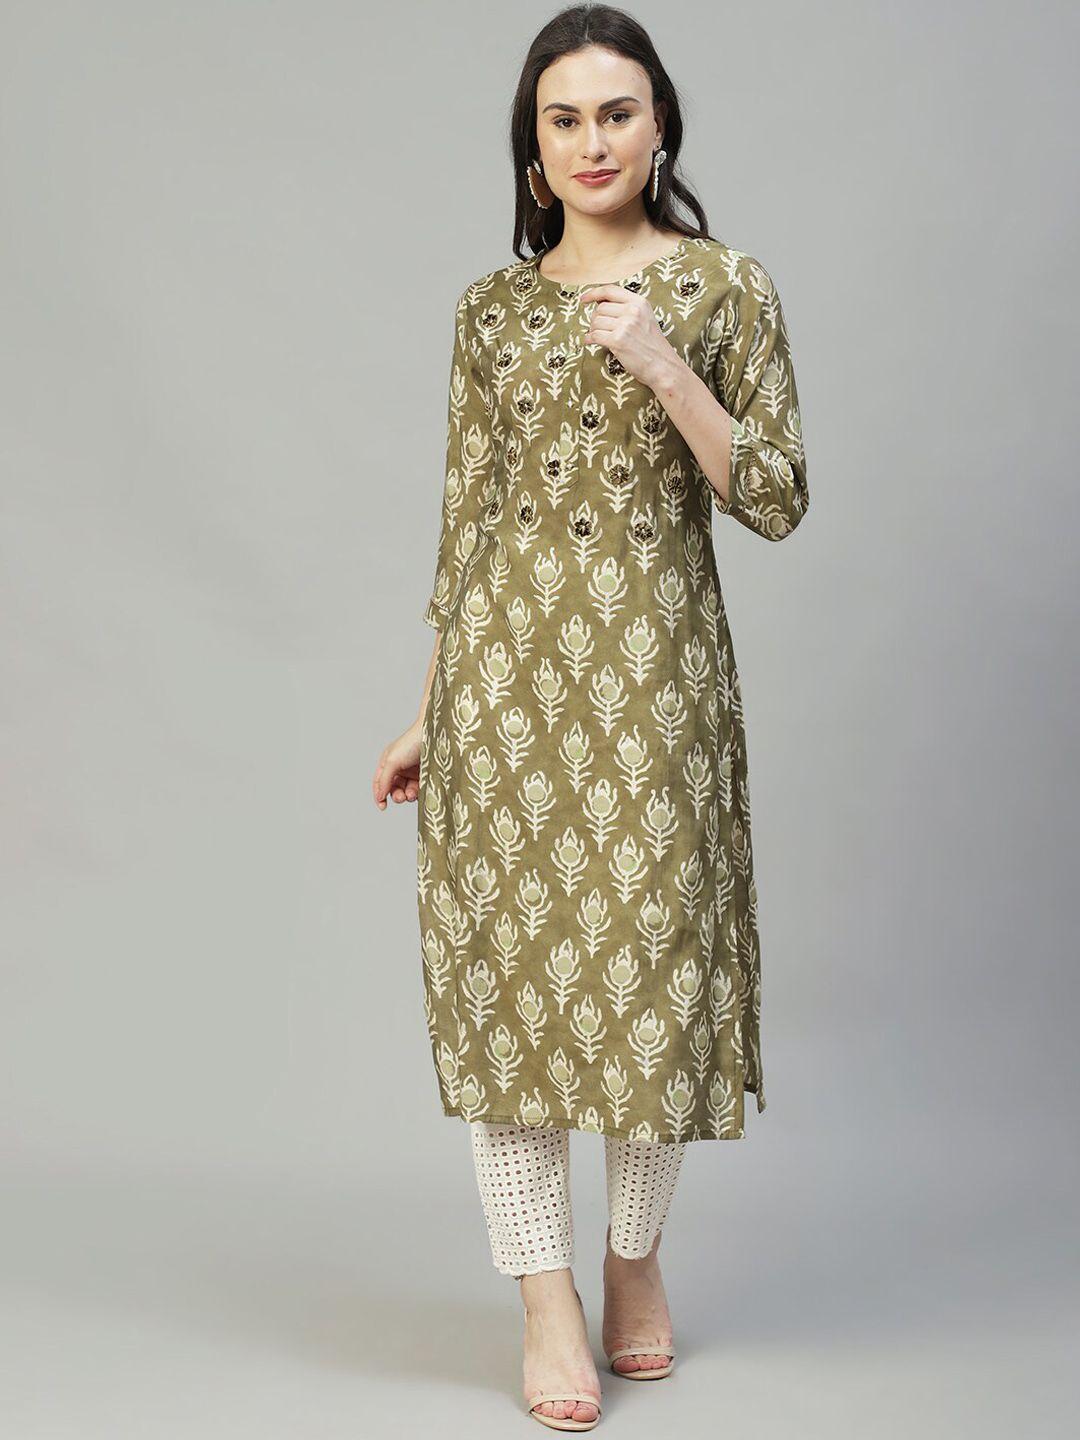 fashor women olive green & off white printed ethnic motifs embroidered kurta